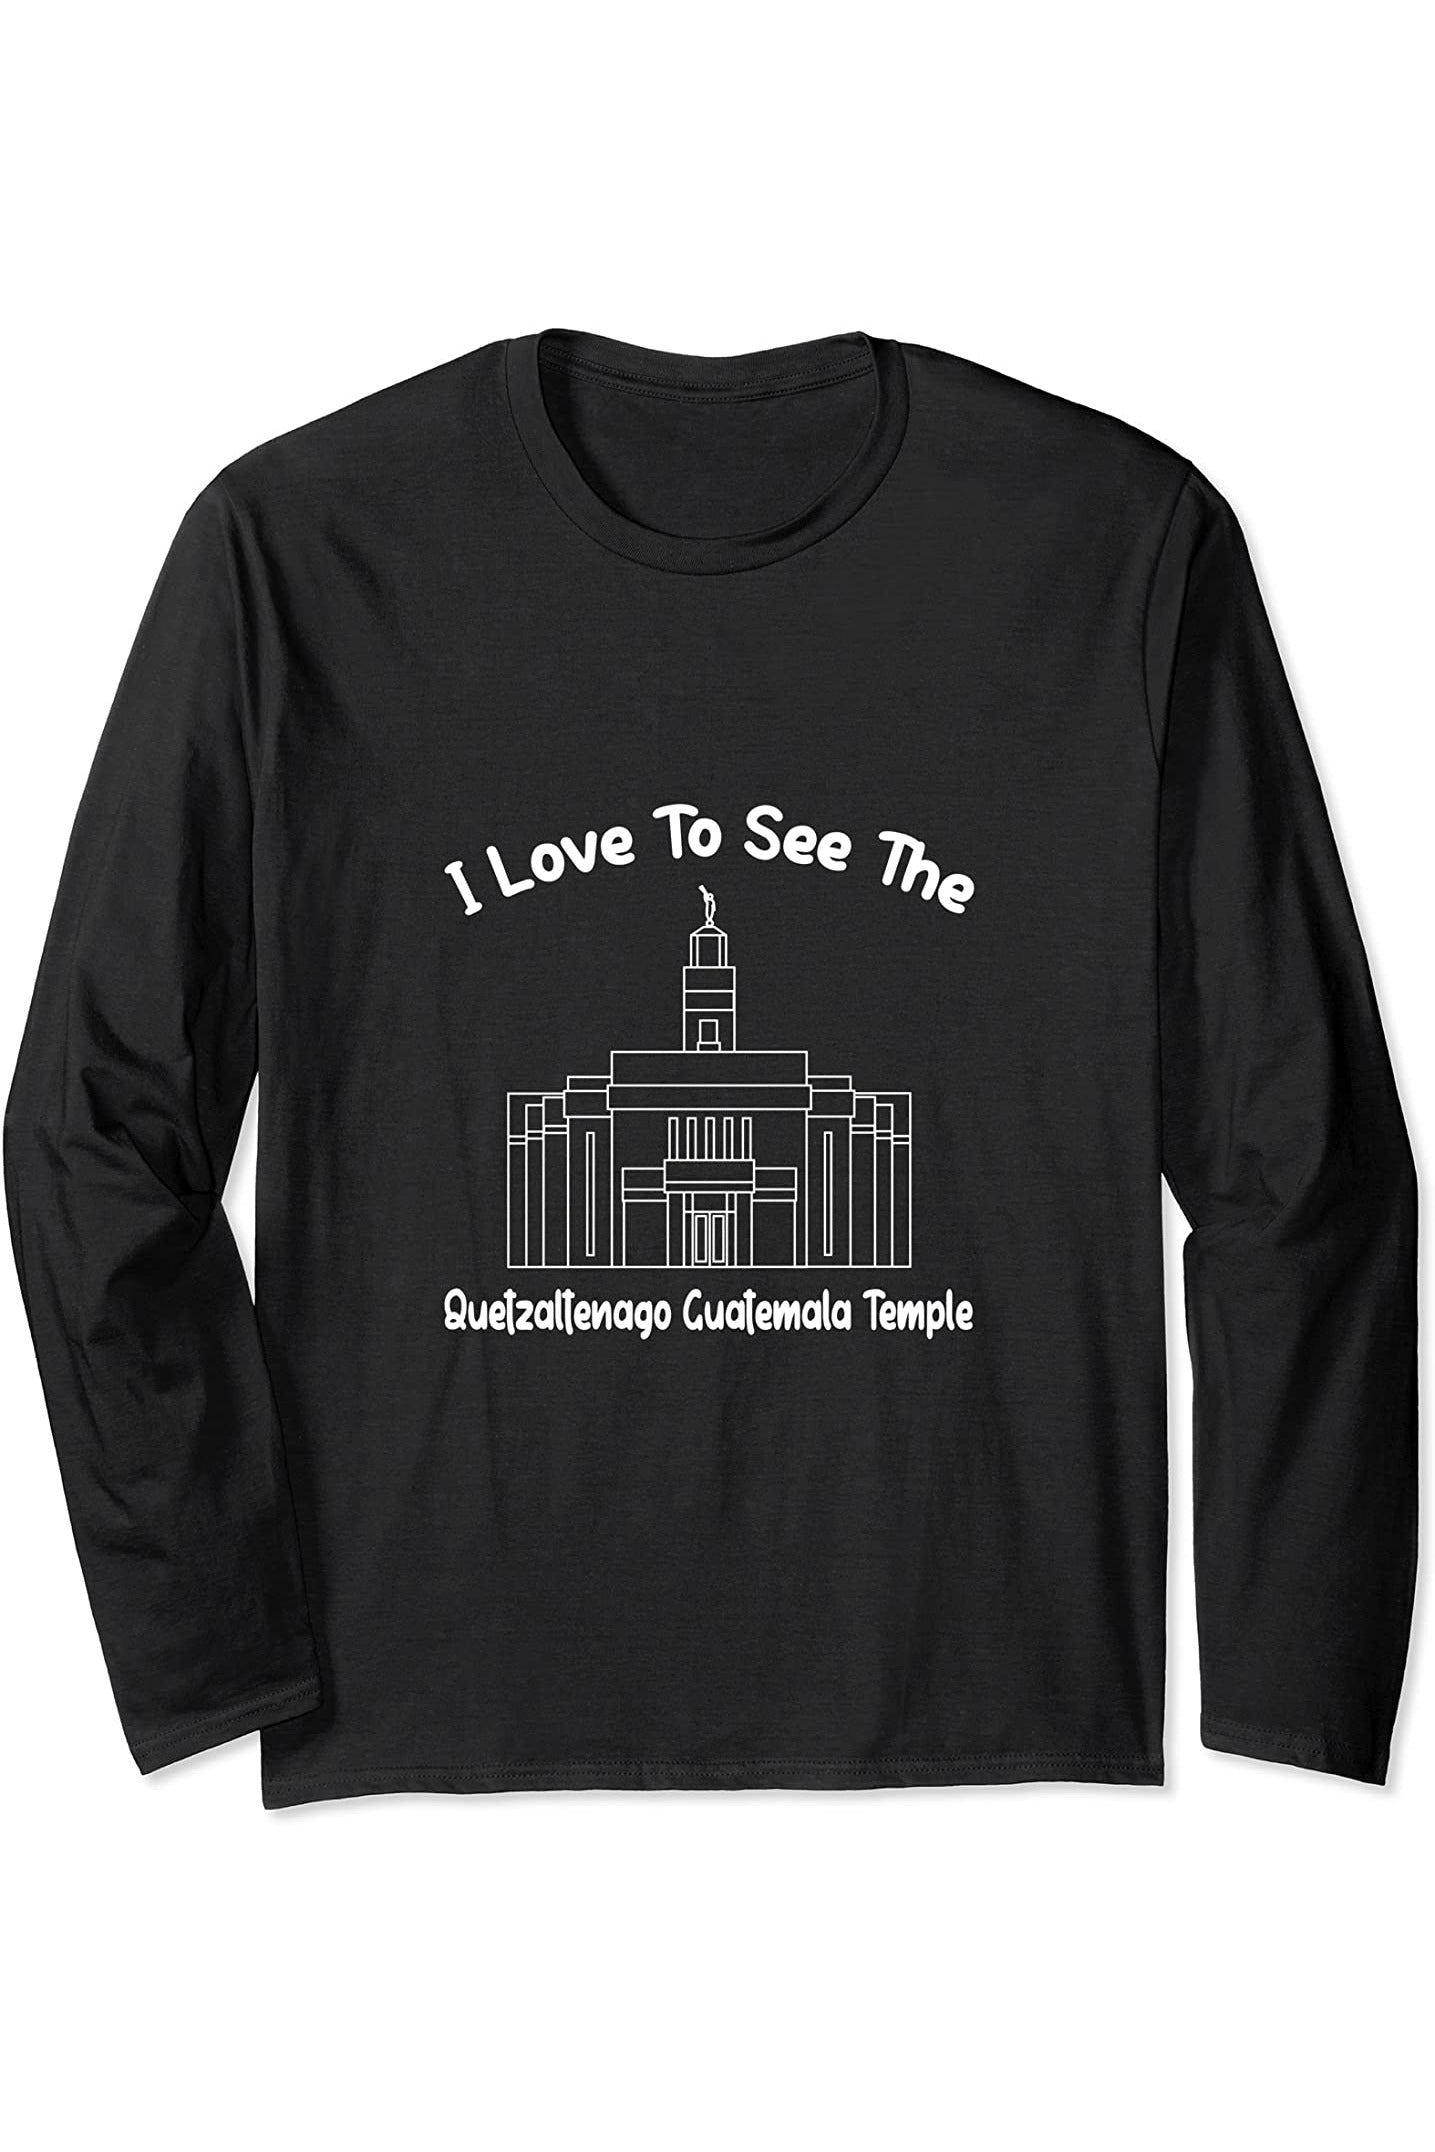 Quetzaltenango Guatemala Temple Long Sleeve T-Shirt - Primary Style (English) US